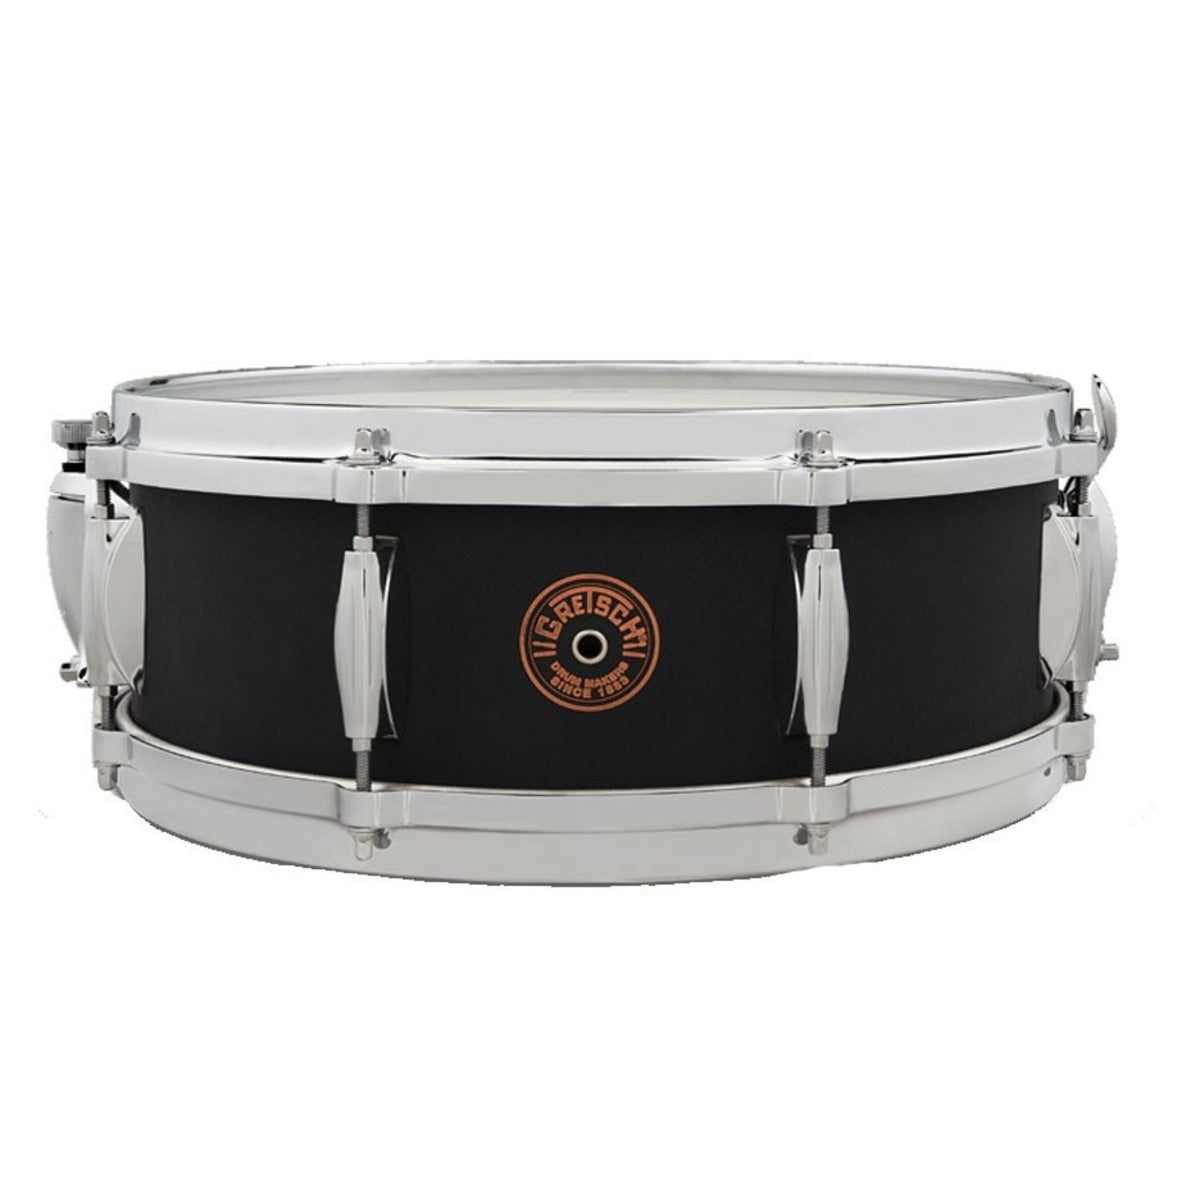 Gretsch USA Black Copper 14"x5" Snare Drum